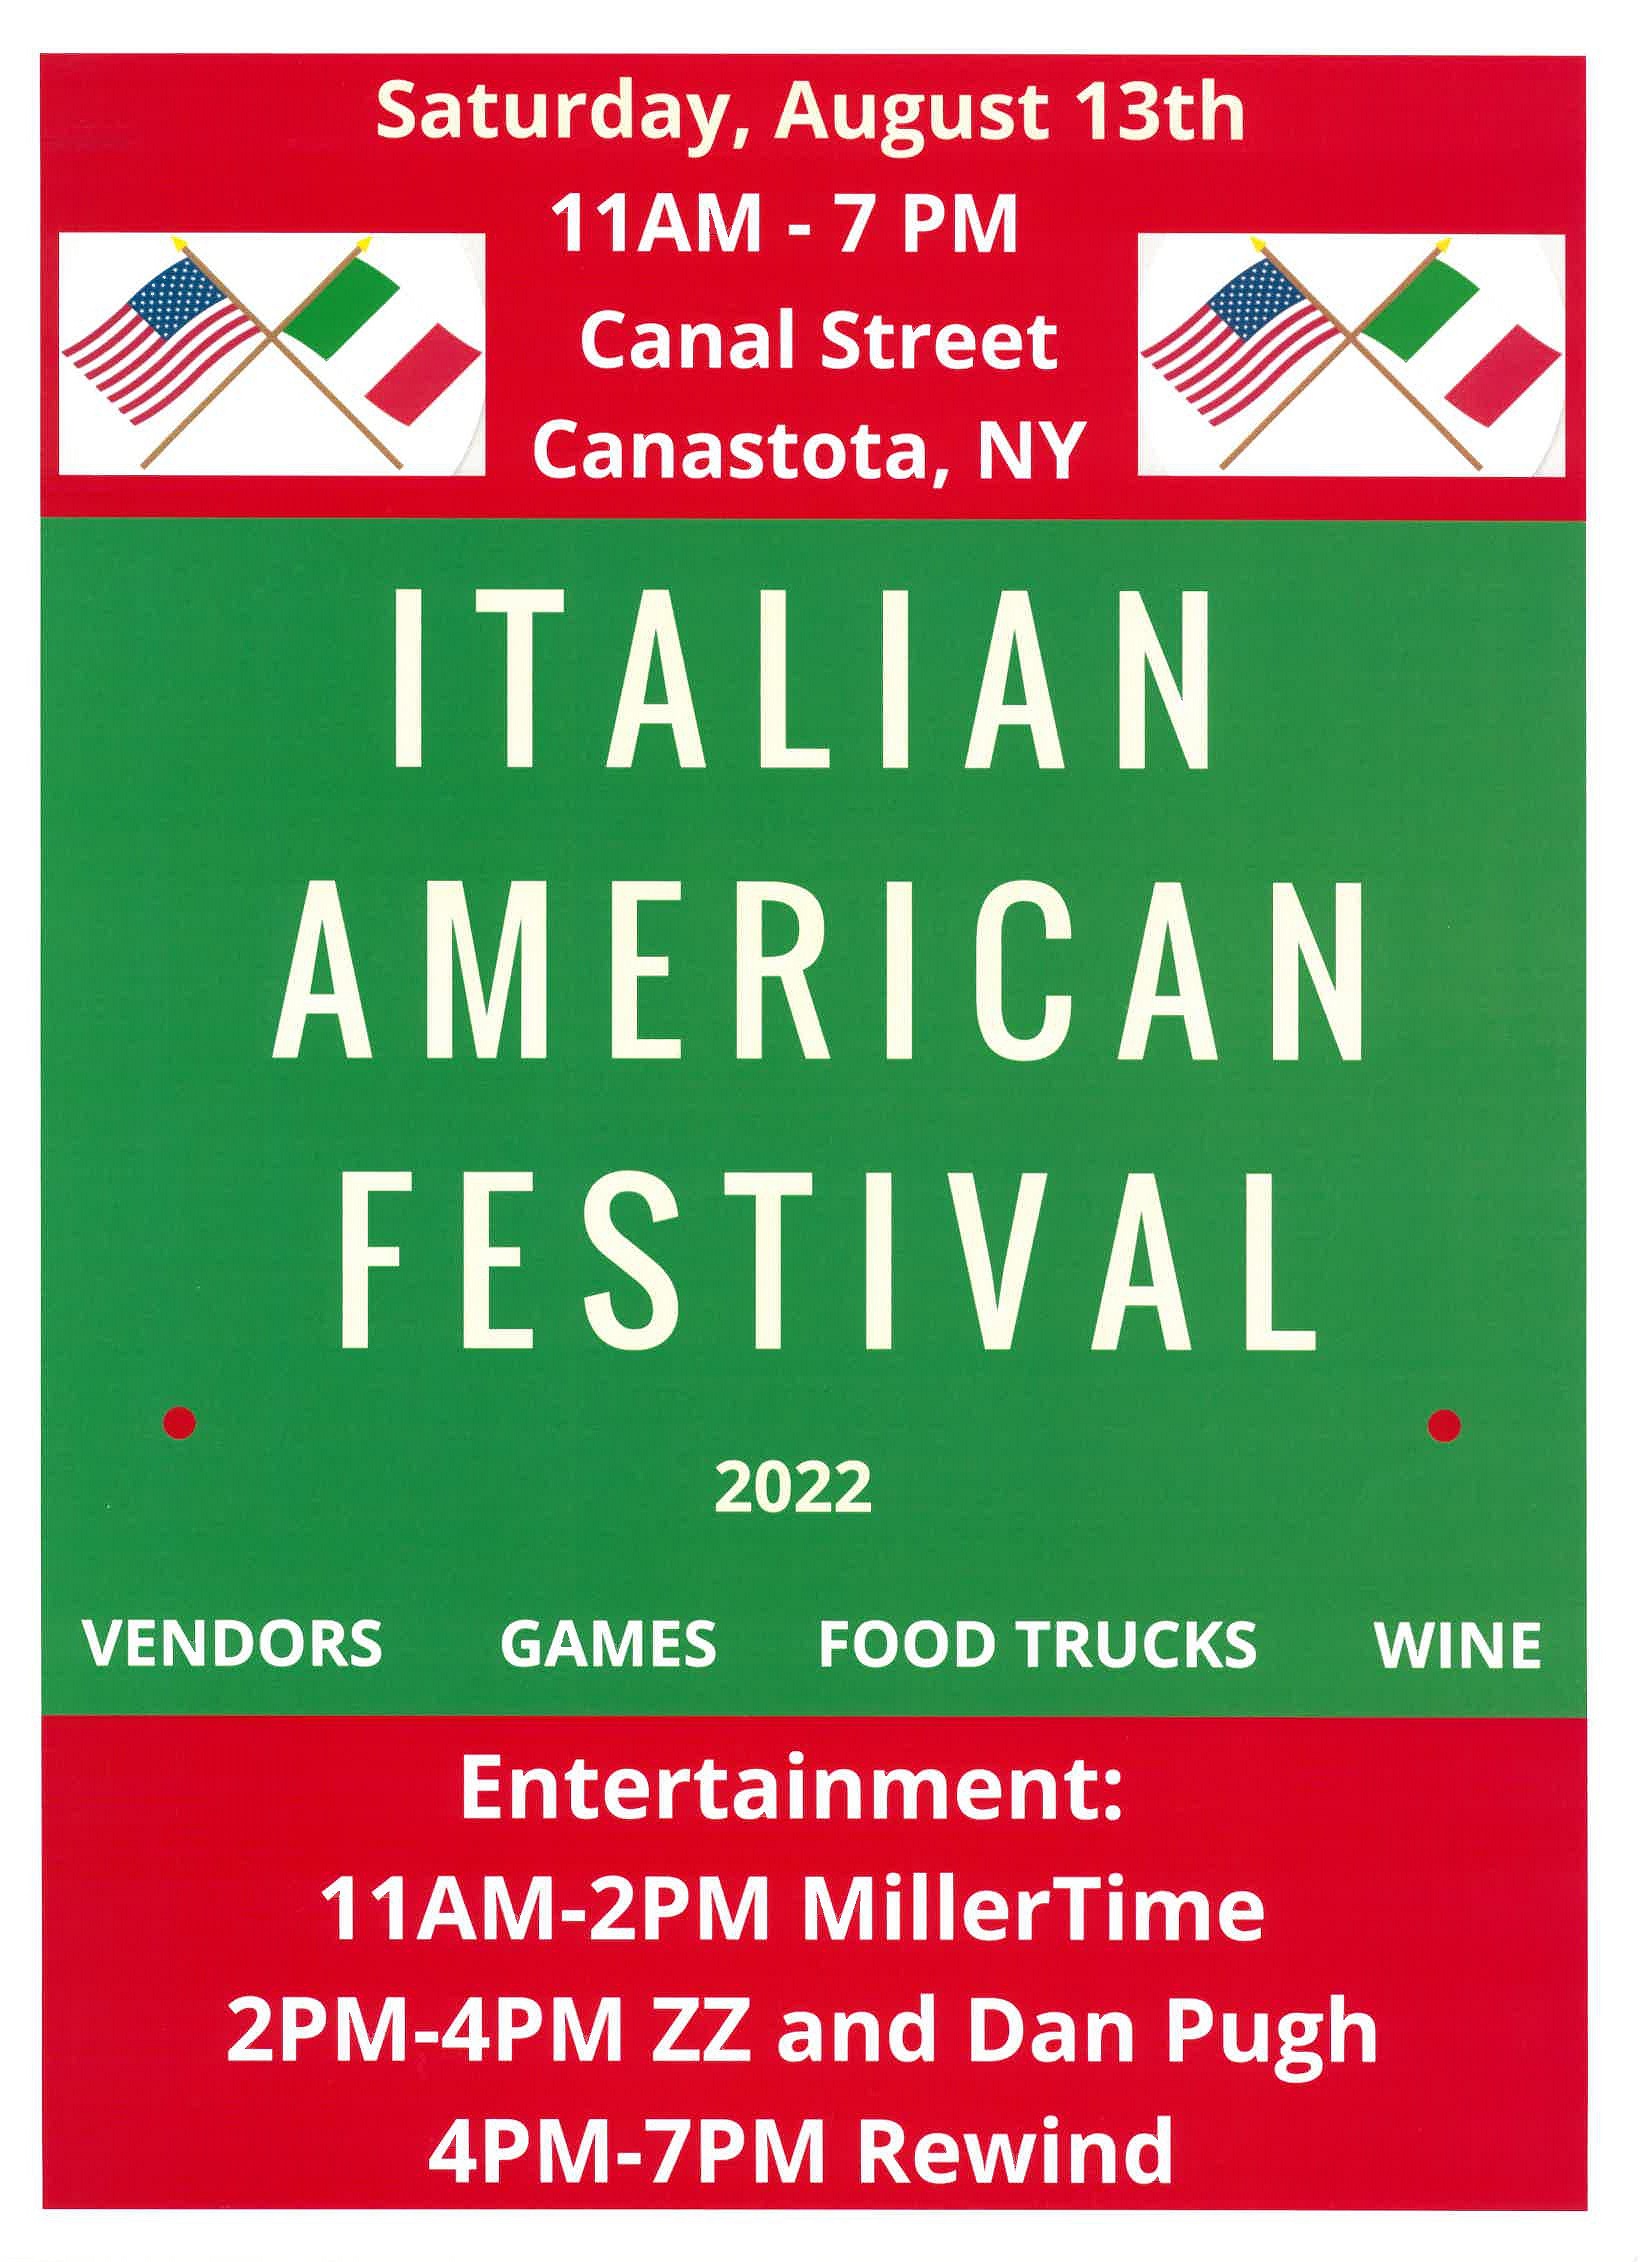 2022 Italian American Festival - Village of Canastota, NY